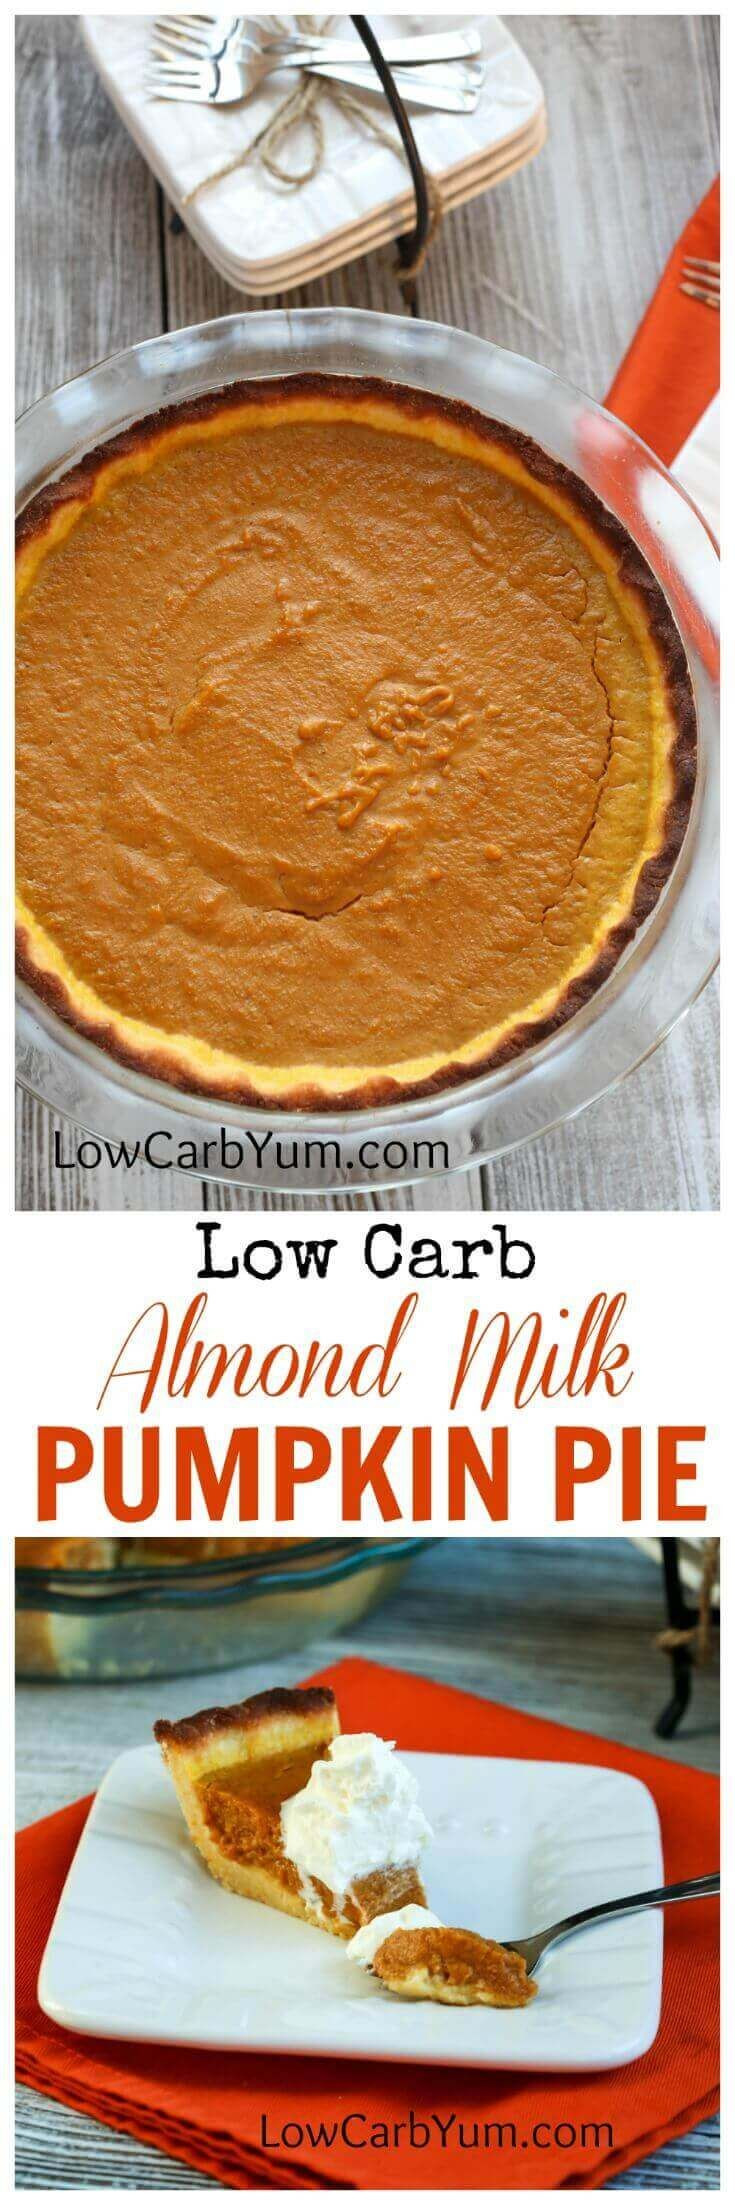 Healthy Pumpkin Pie Recipe With Almond Milk
 A low carb and gluten free almond milk pumpkin pie recipe